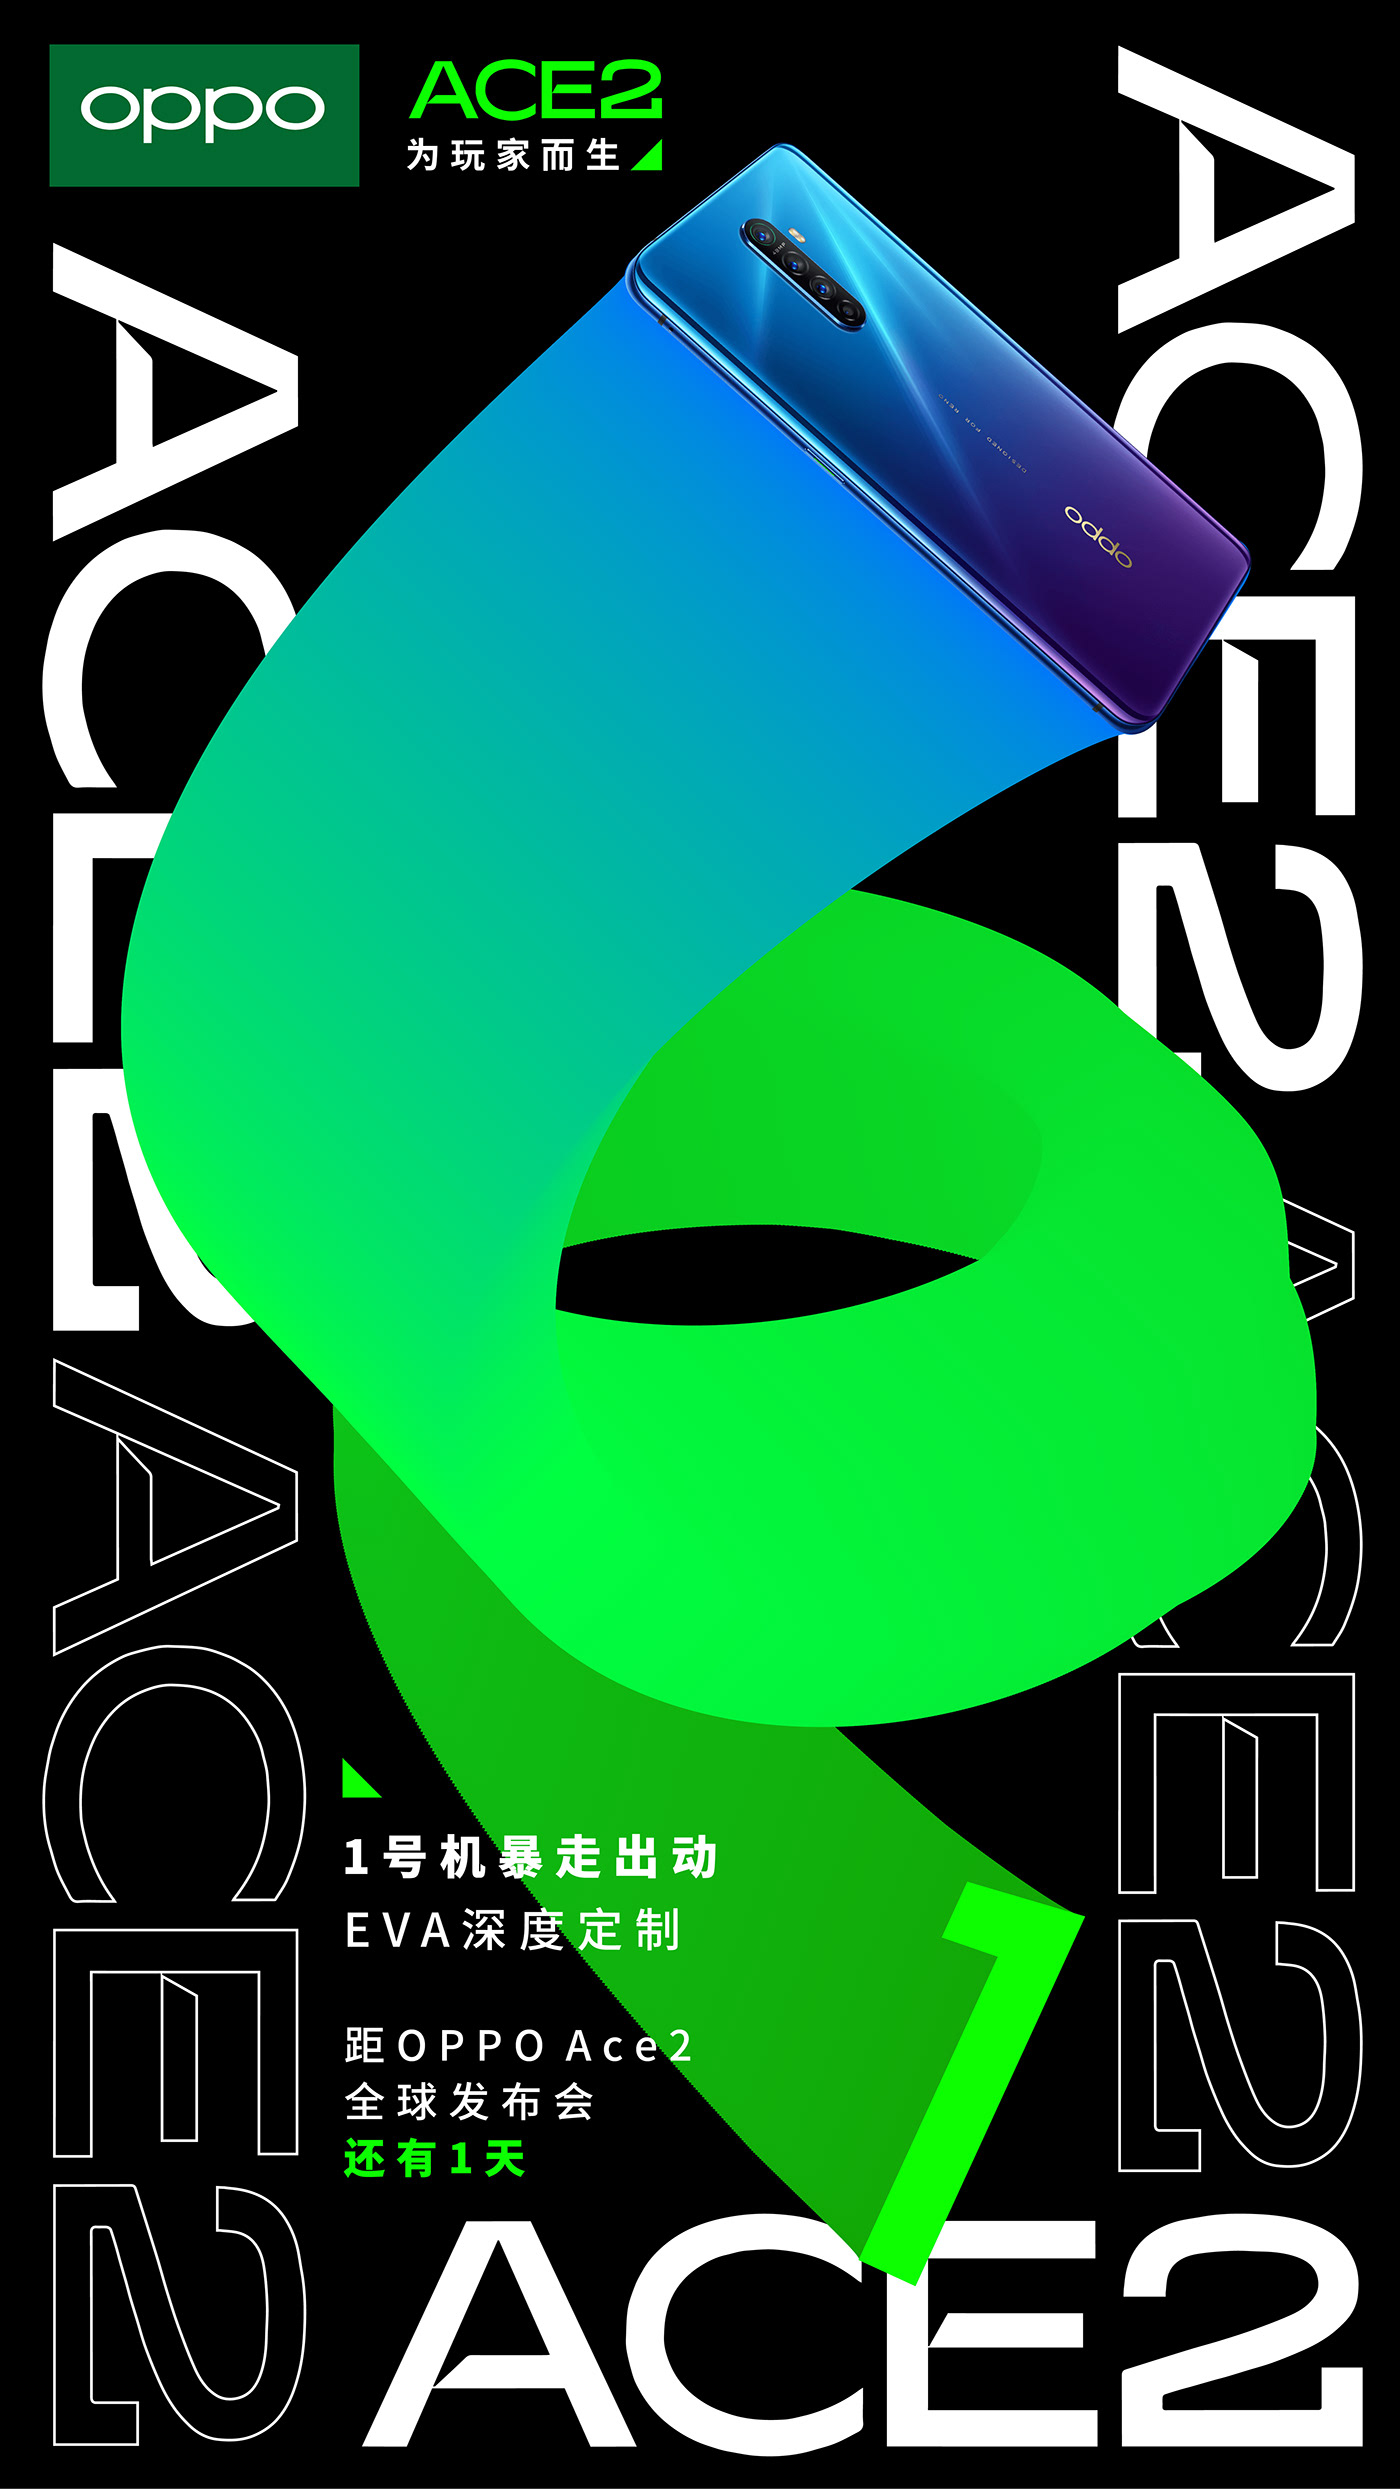 disney durex mulan Oppo poster Poster Design 海报 海报设计 花木兰